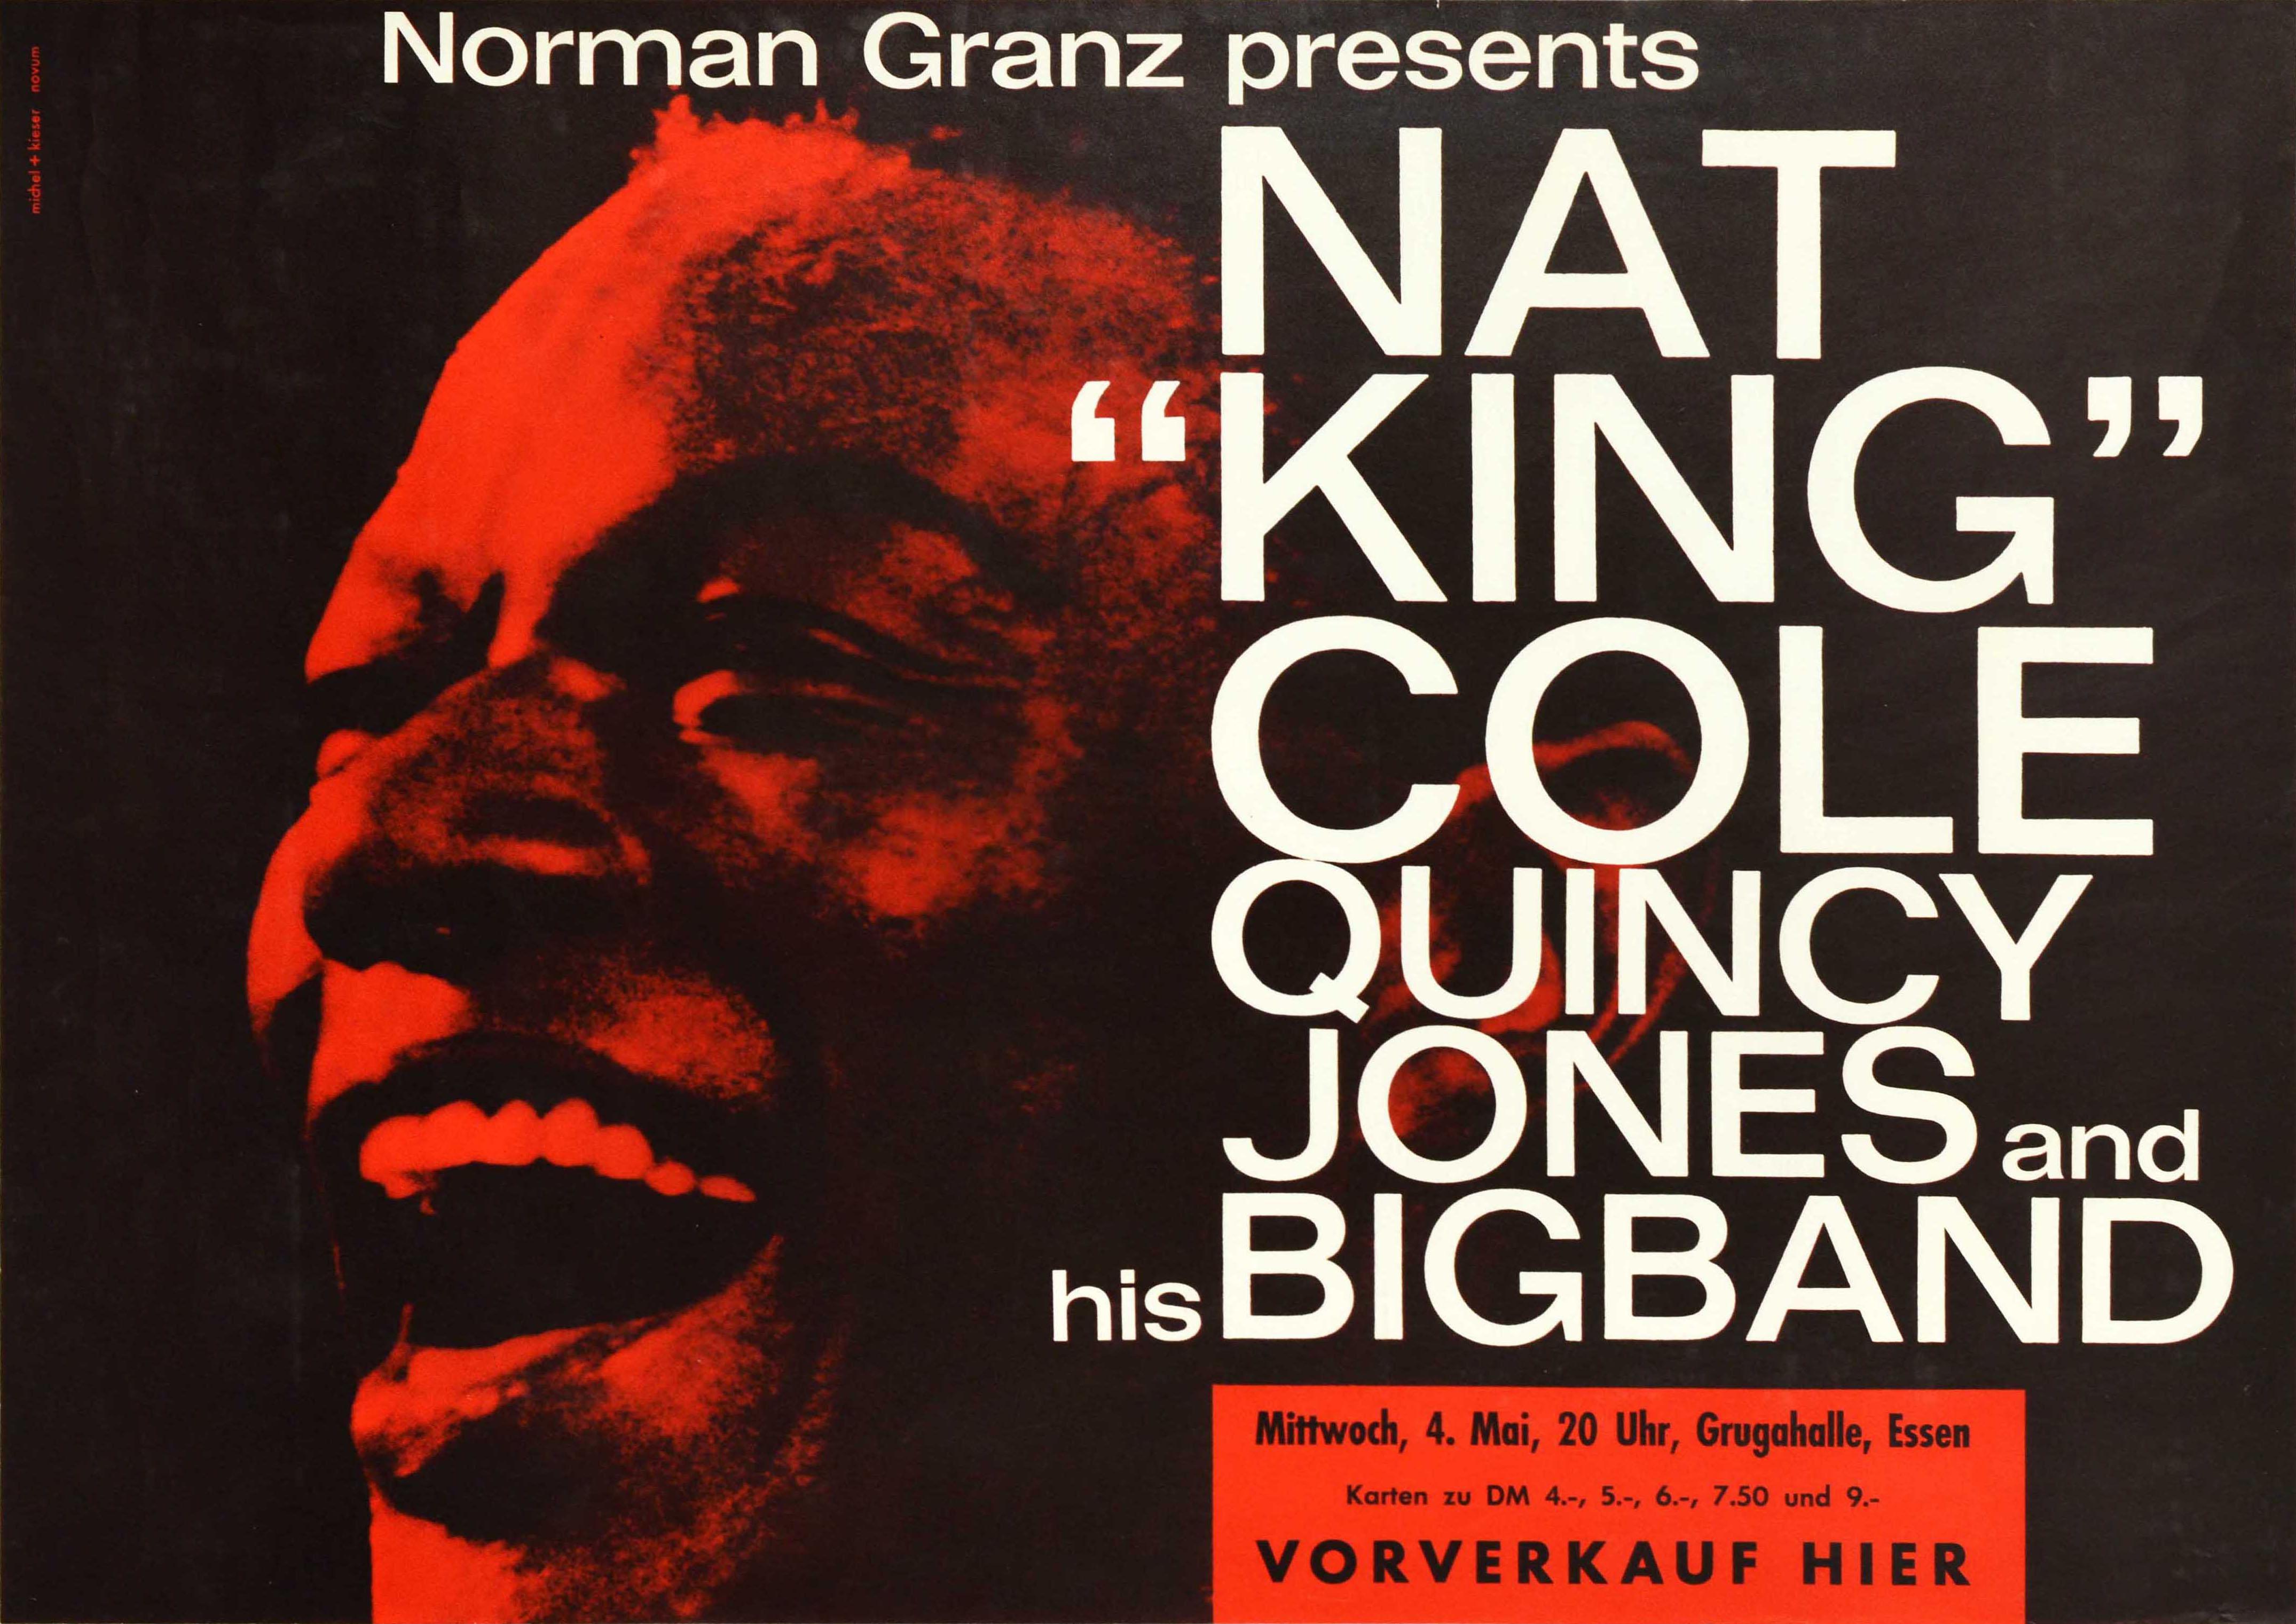 Günther Kieser Print - Original Vintage Poster Nat King Cole Quincy Jones Jazz Big Band Music Concert